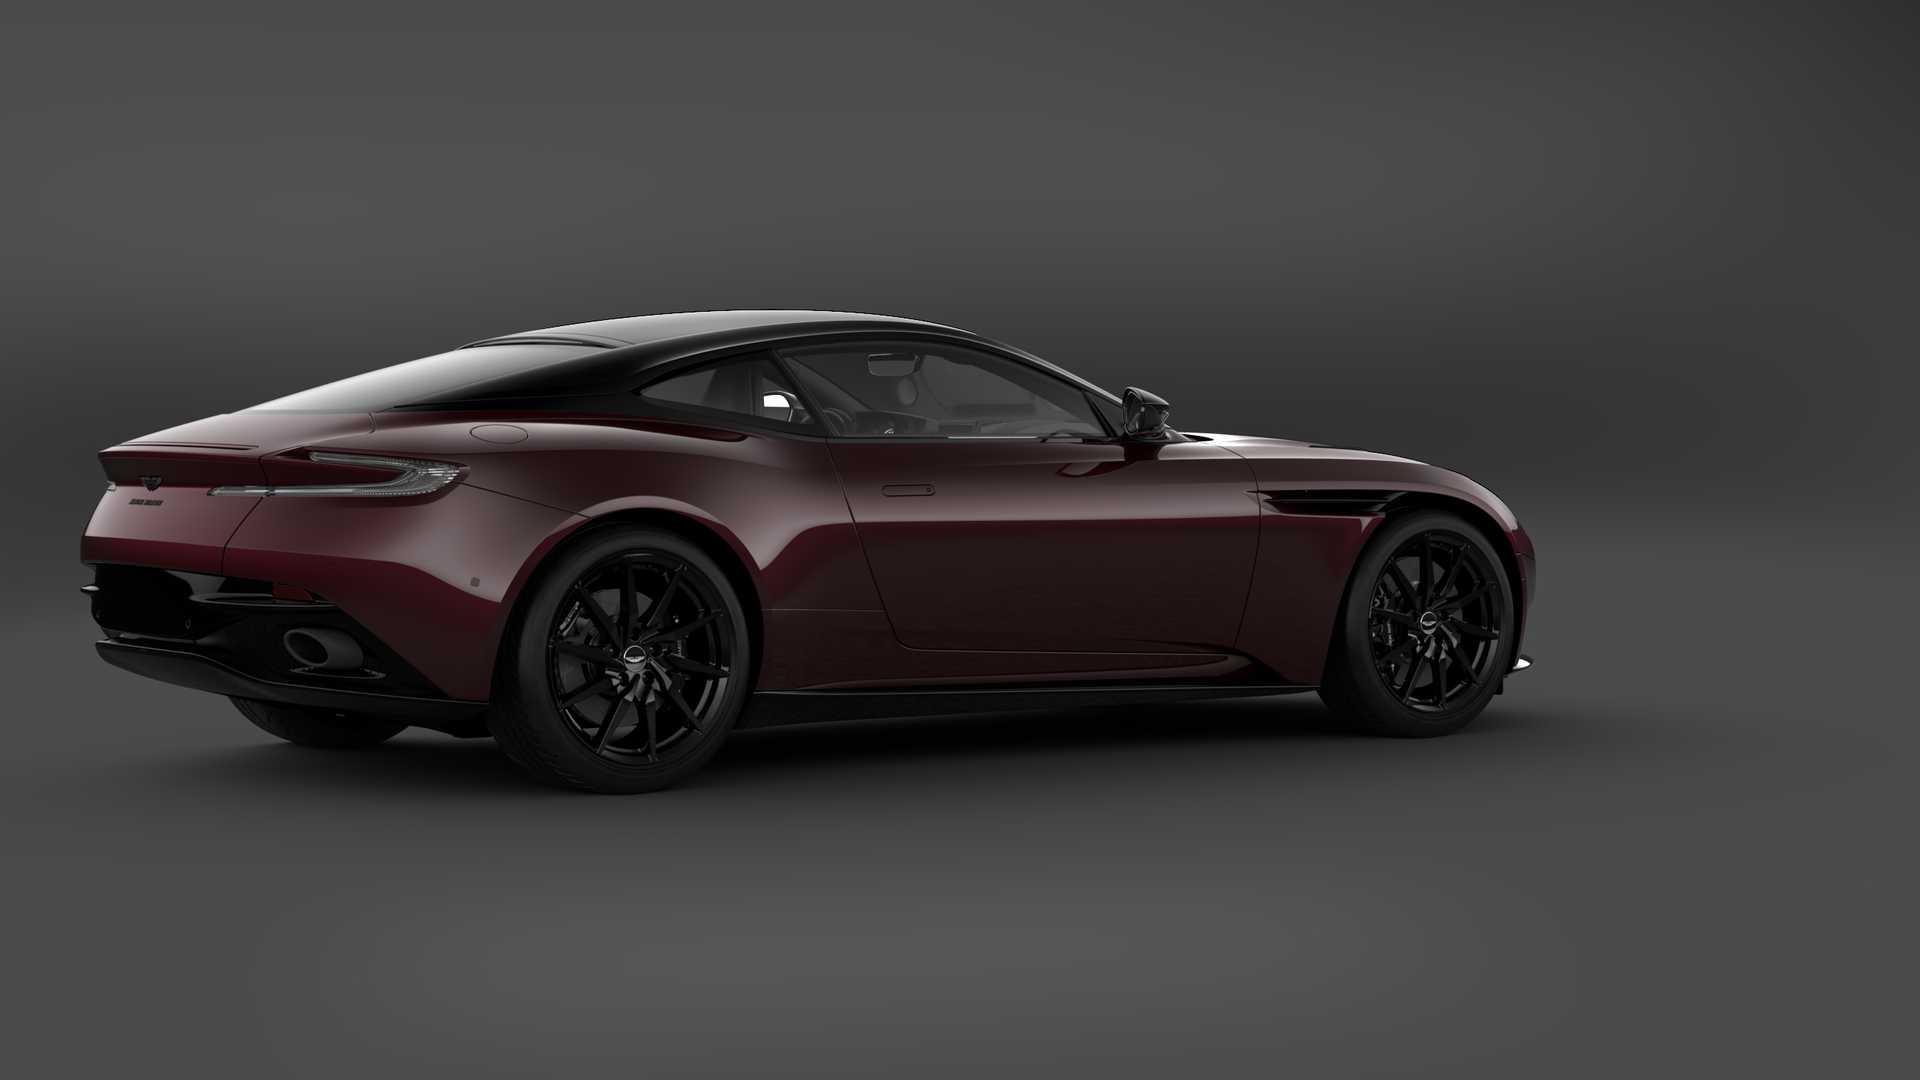 2021 Aston Martin Db11 Gets V8-Engined Shadow Edition - Autoevolution